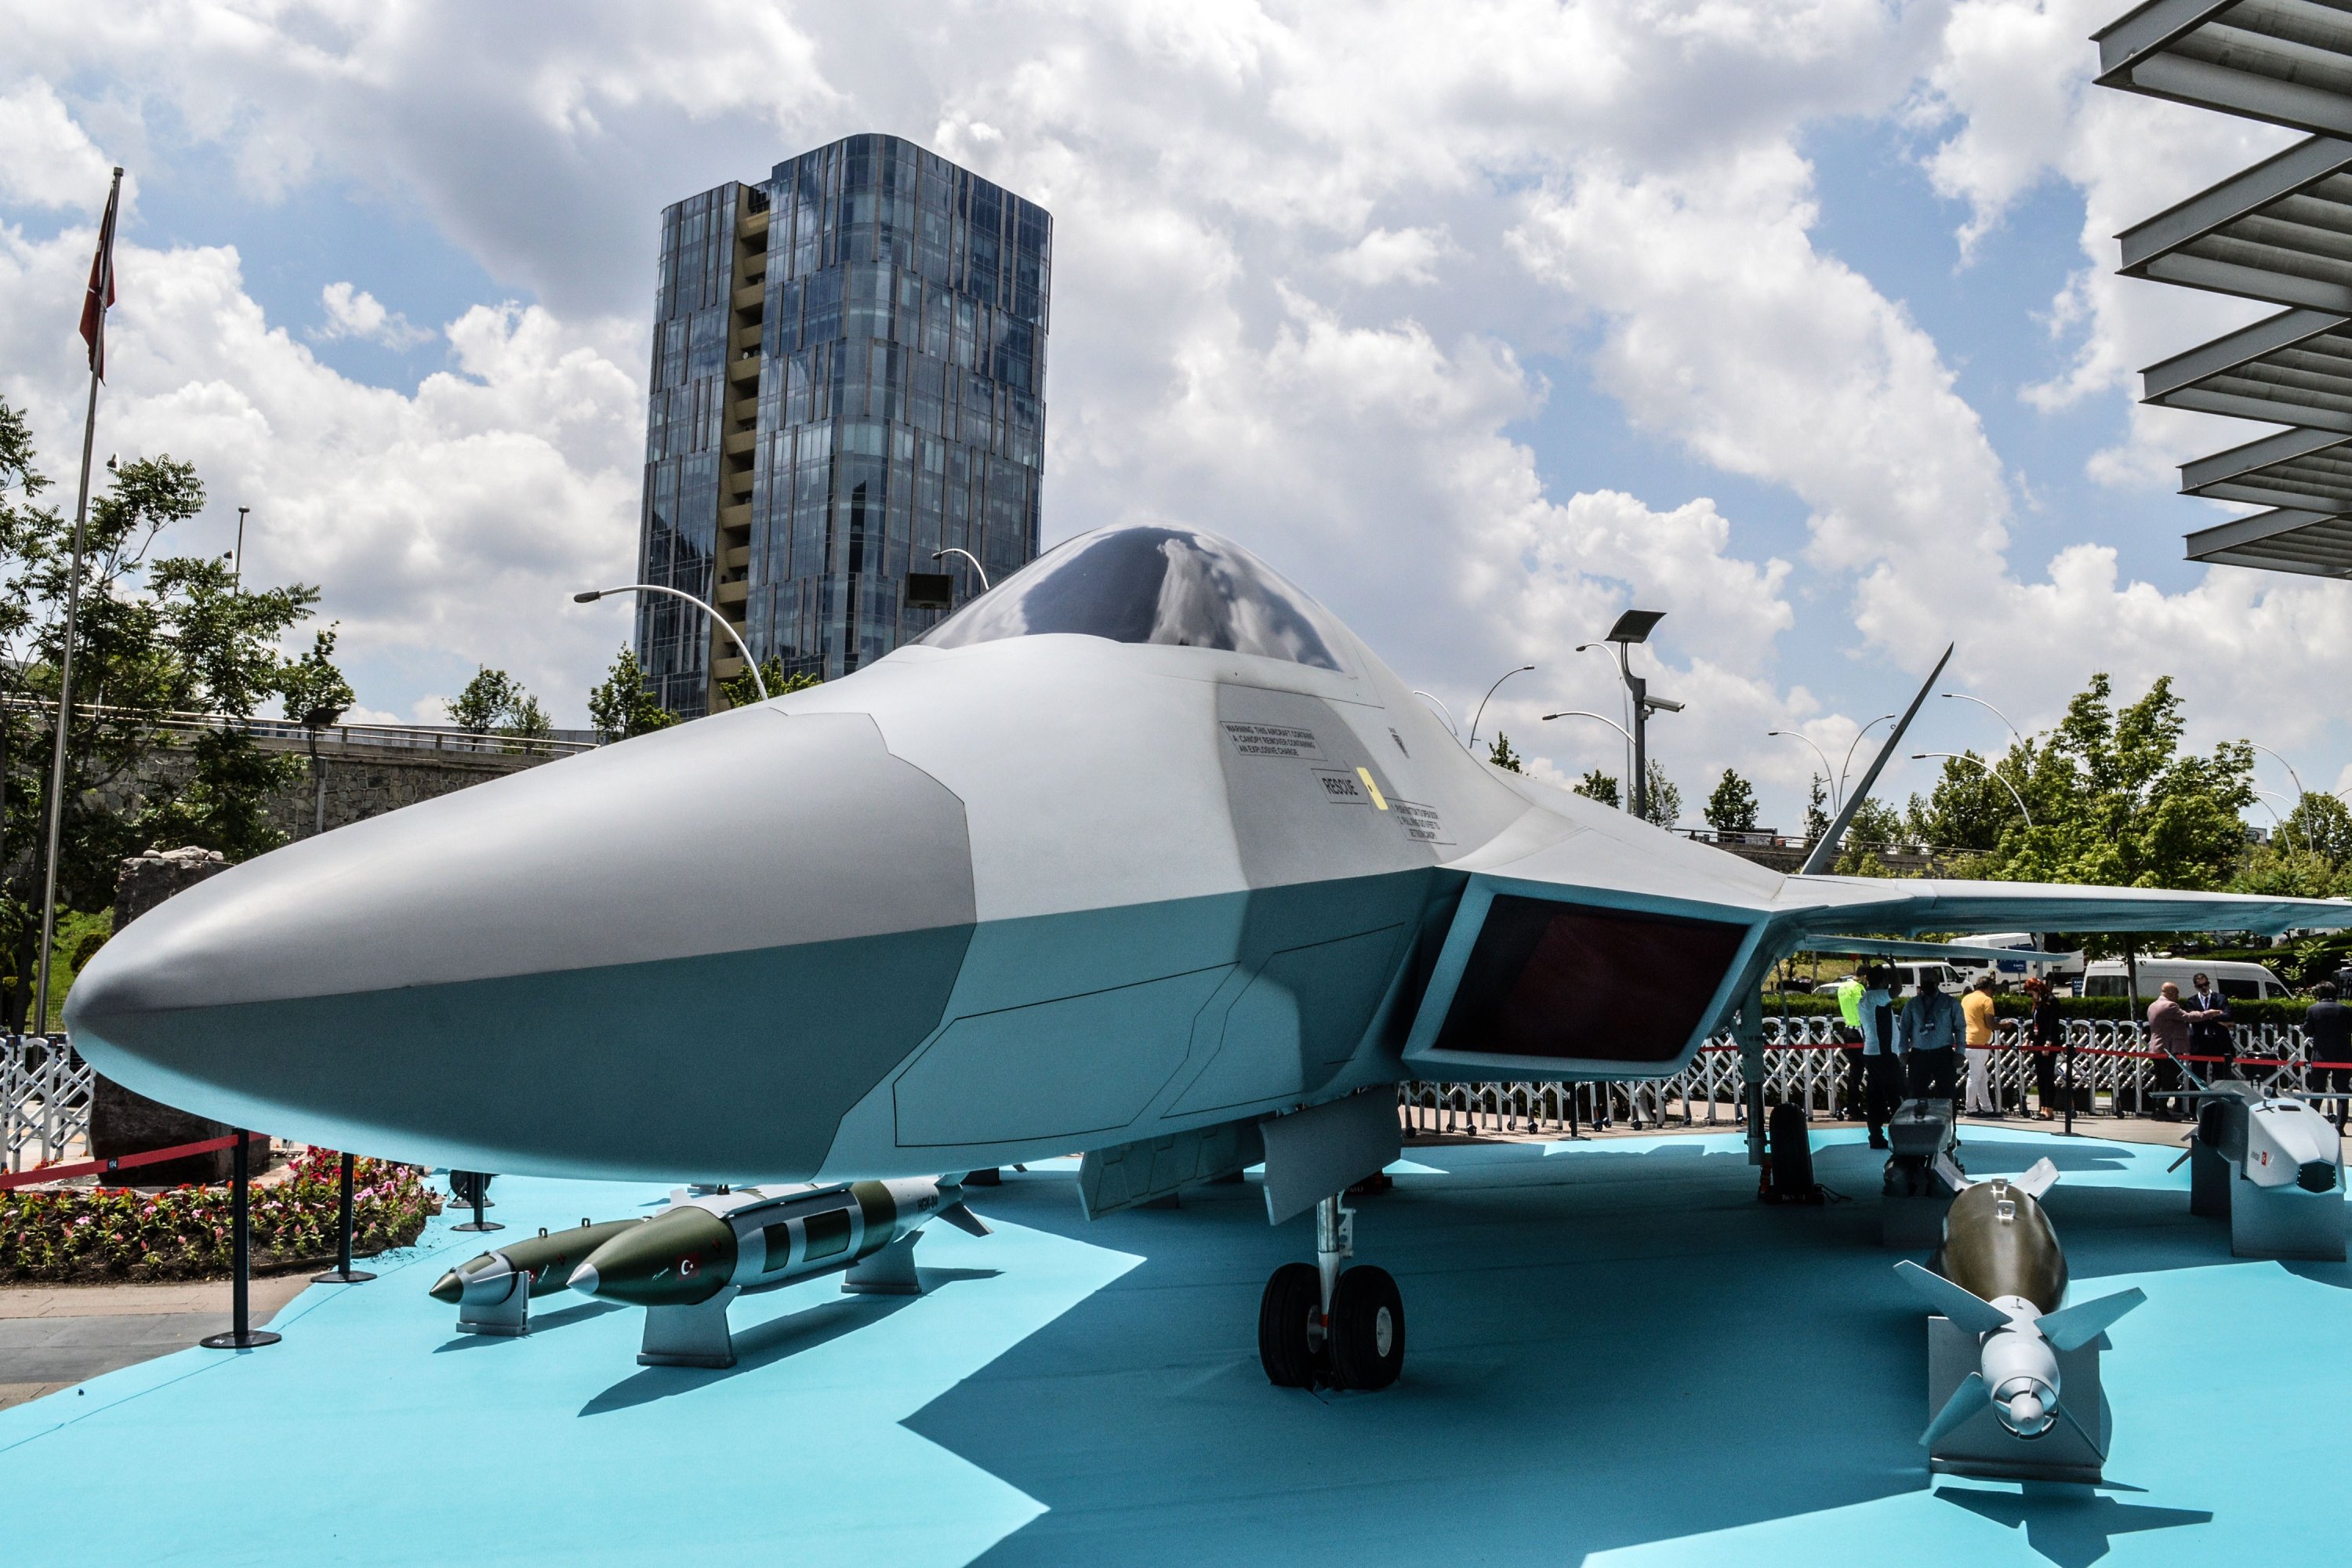 Sebuah mock-up dari Pesawat Tempur Nasional Turki (MMU) selama pameran di Ankara, Turki, 9 Juni 2021. (Foto Reuters)